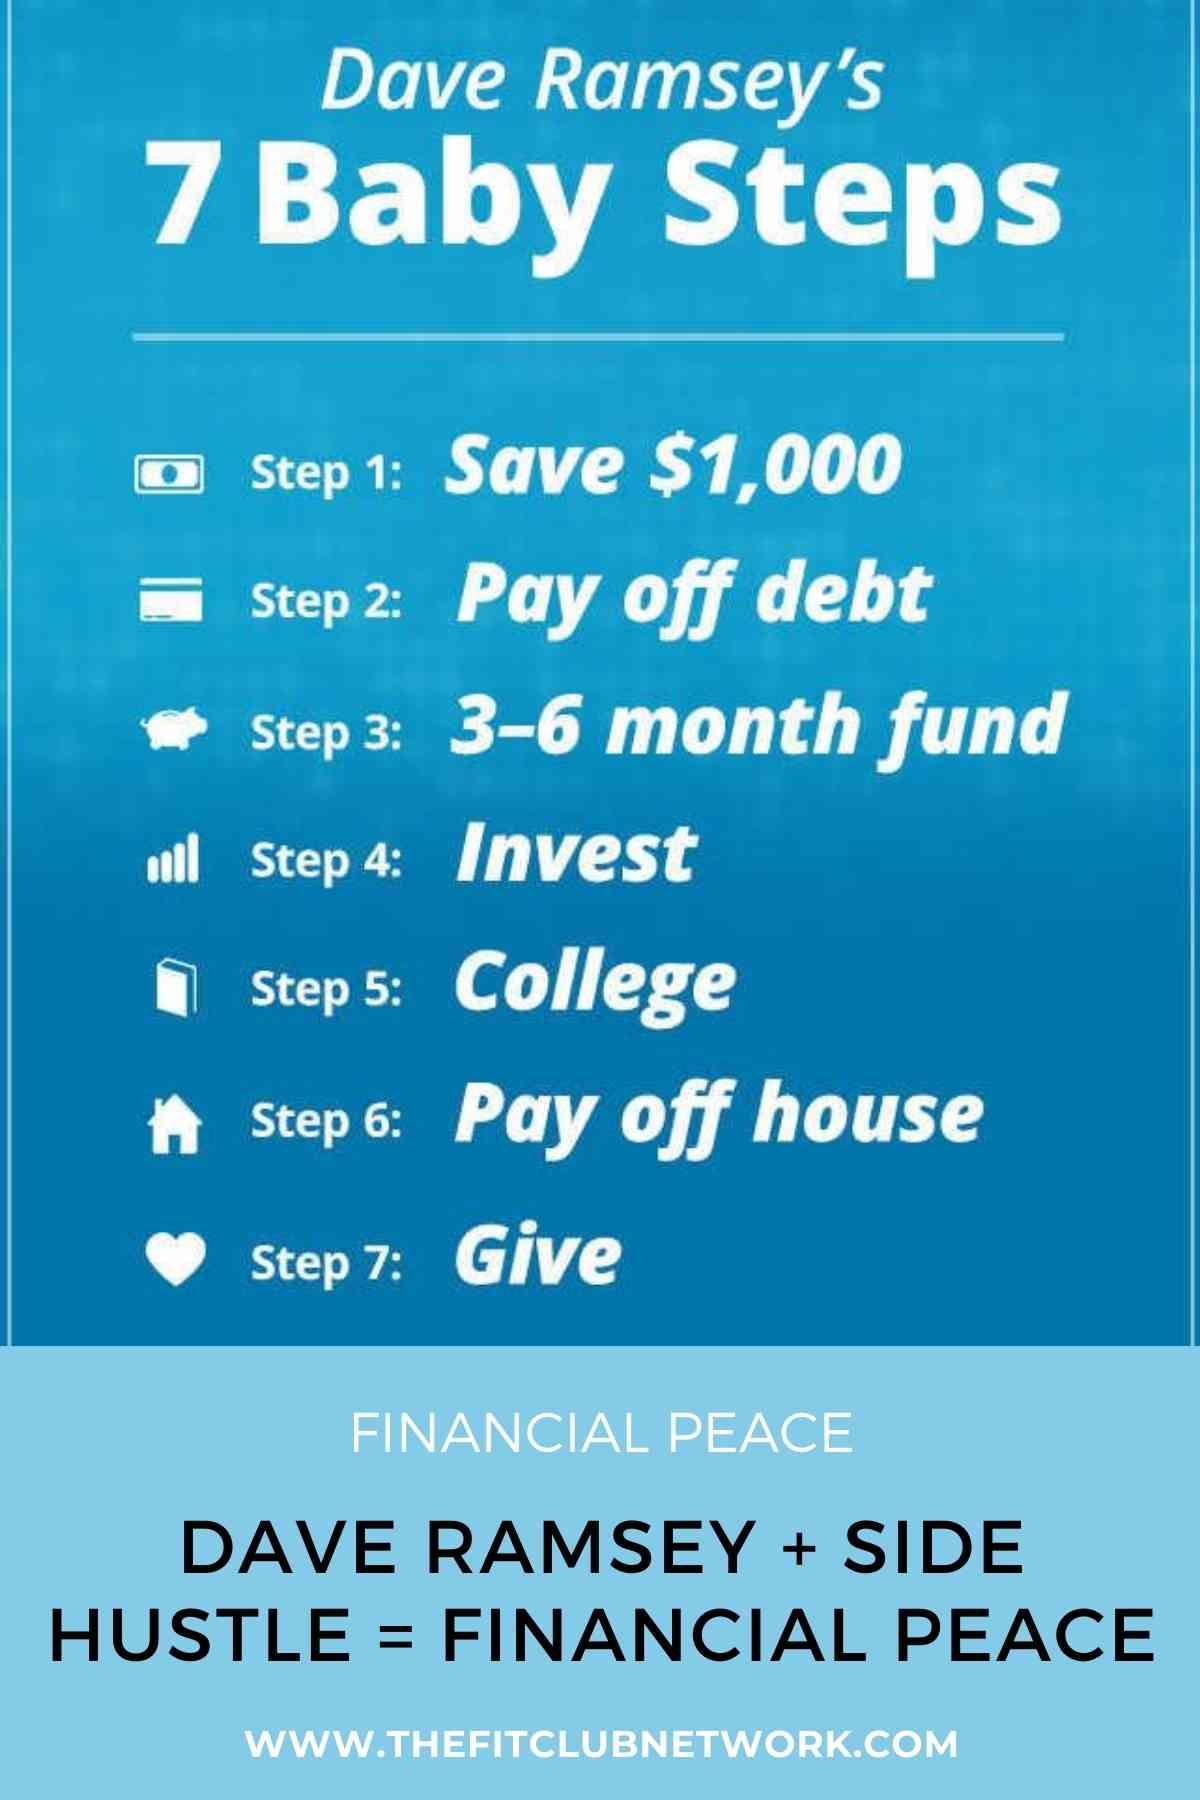 Dave Ramsey + Side Hustle = Financial Peace